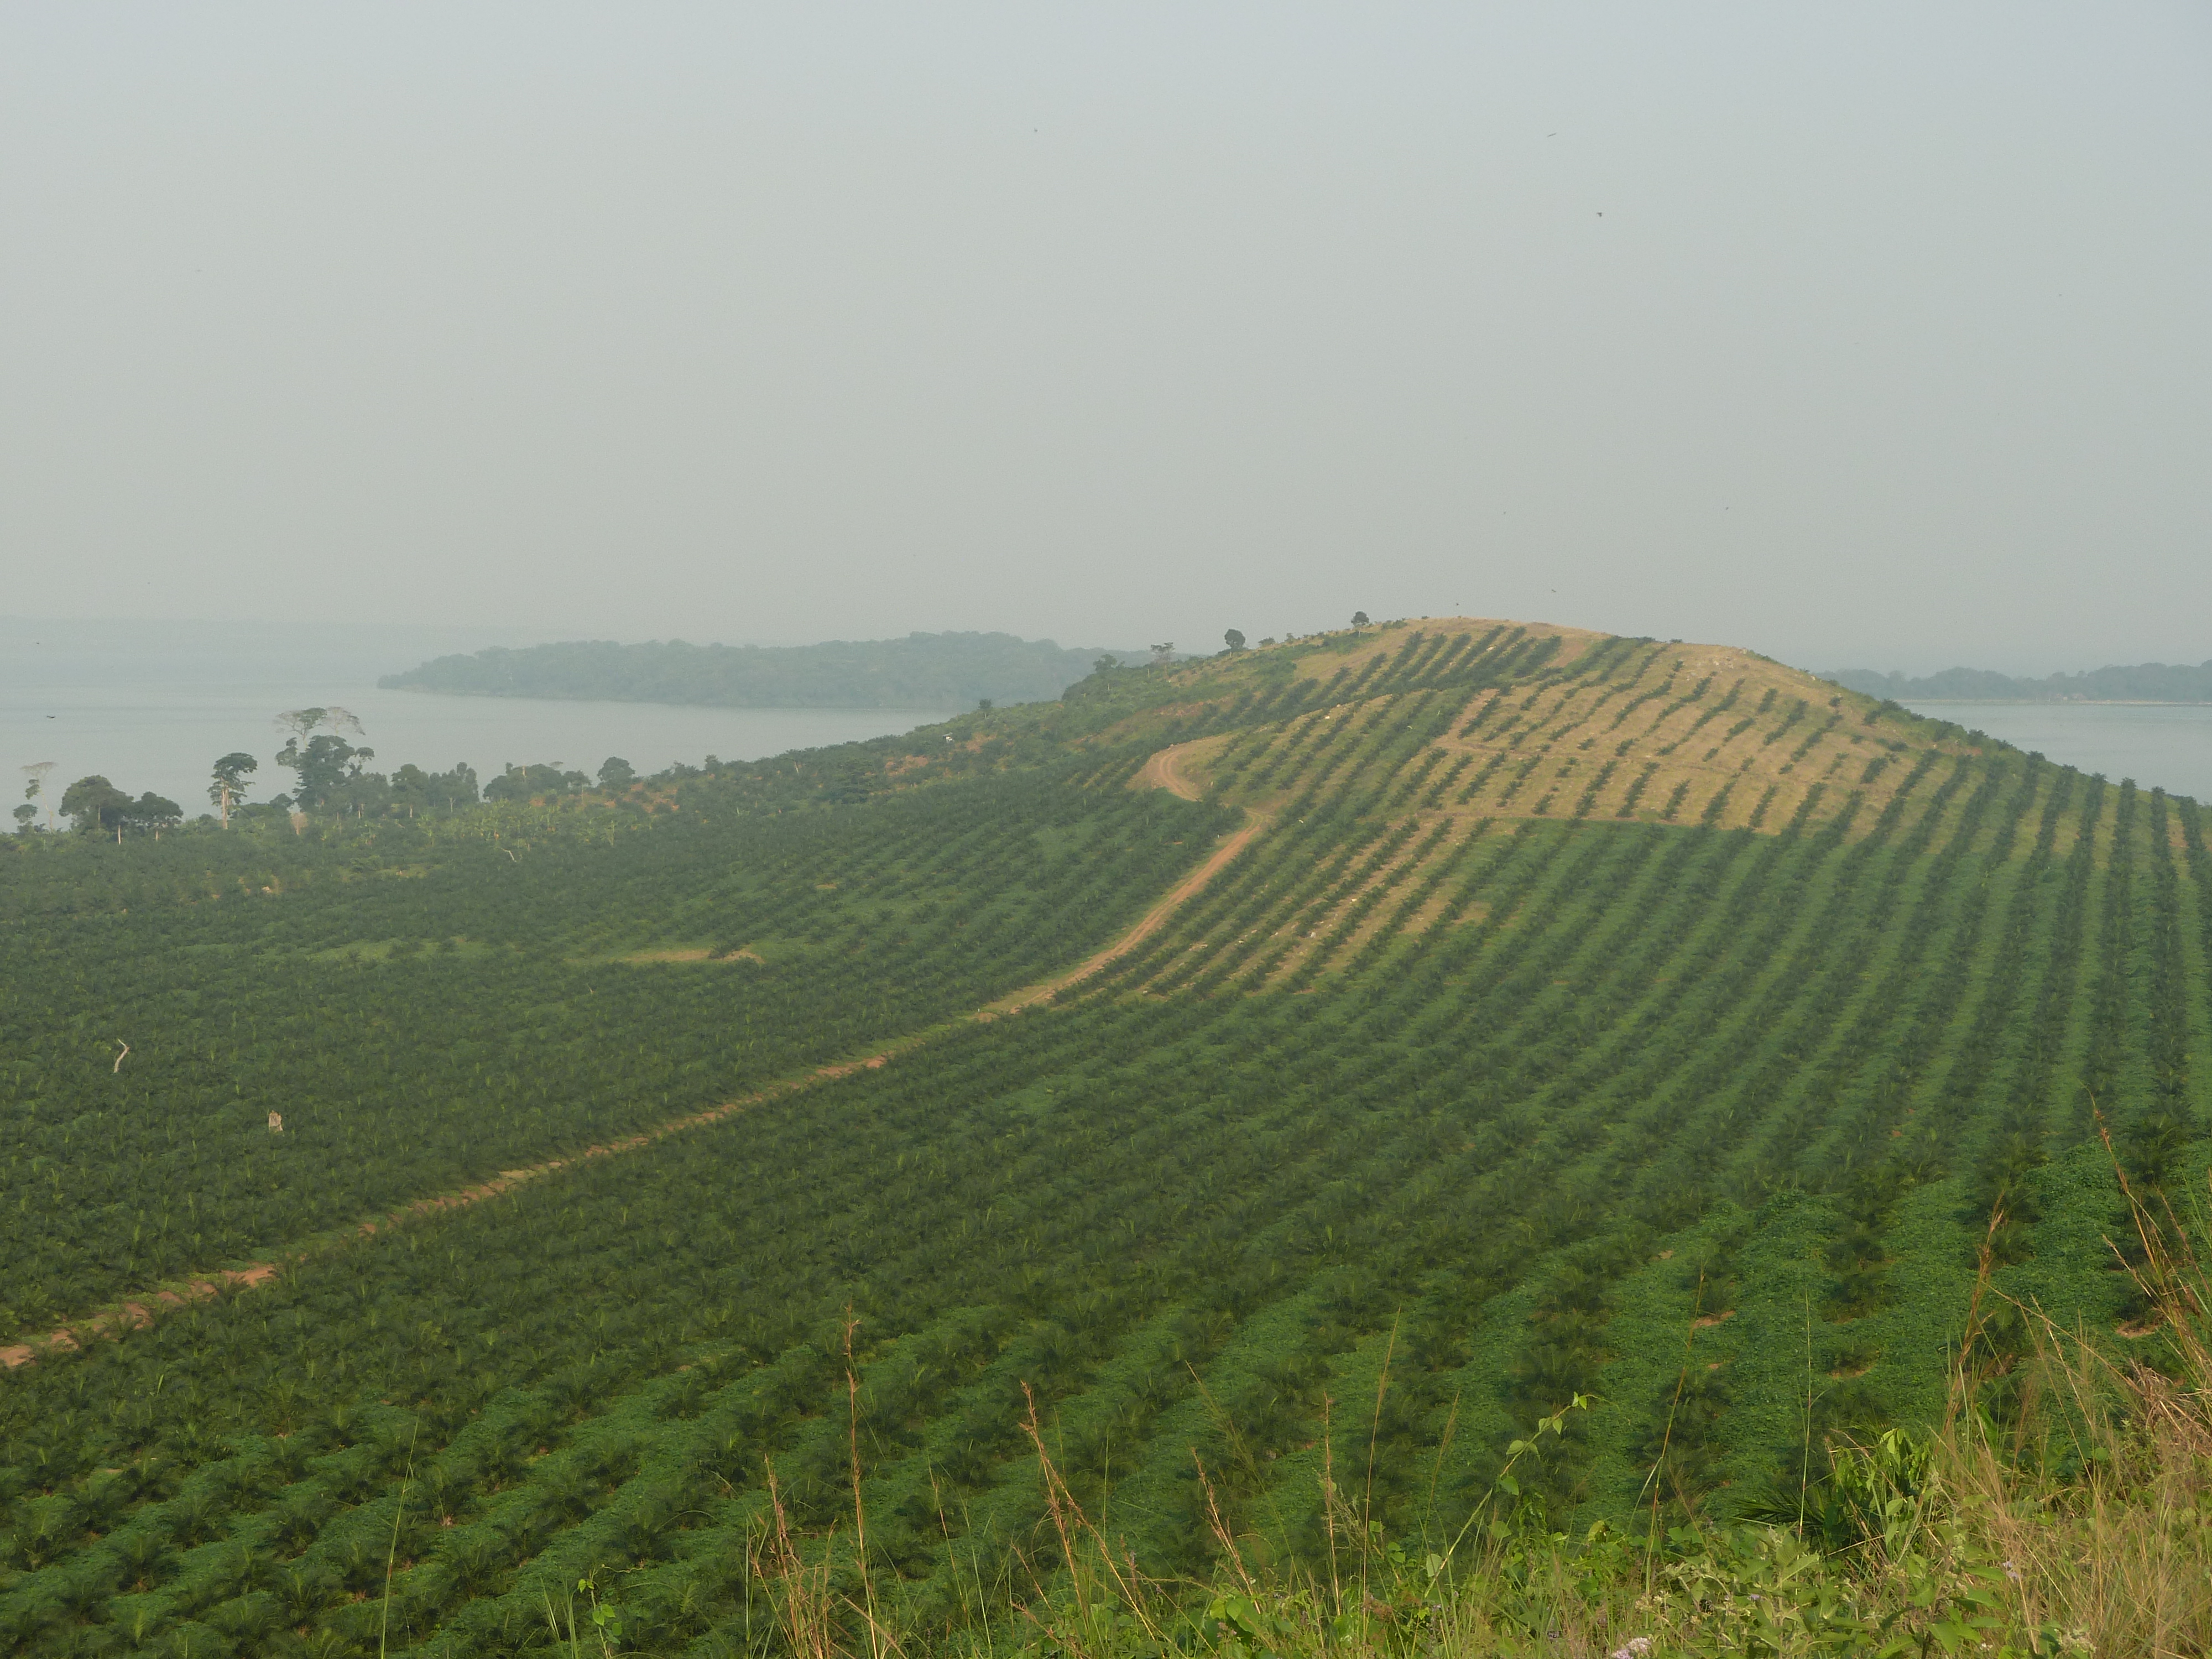 Ugandan farmers sue over palm oil land grab